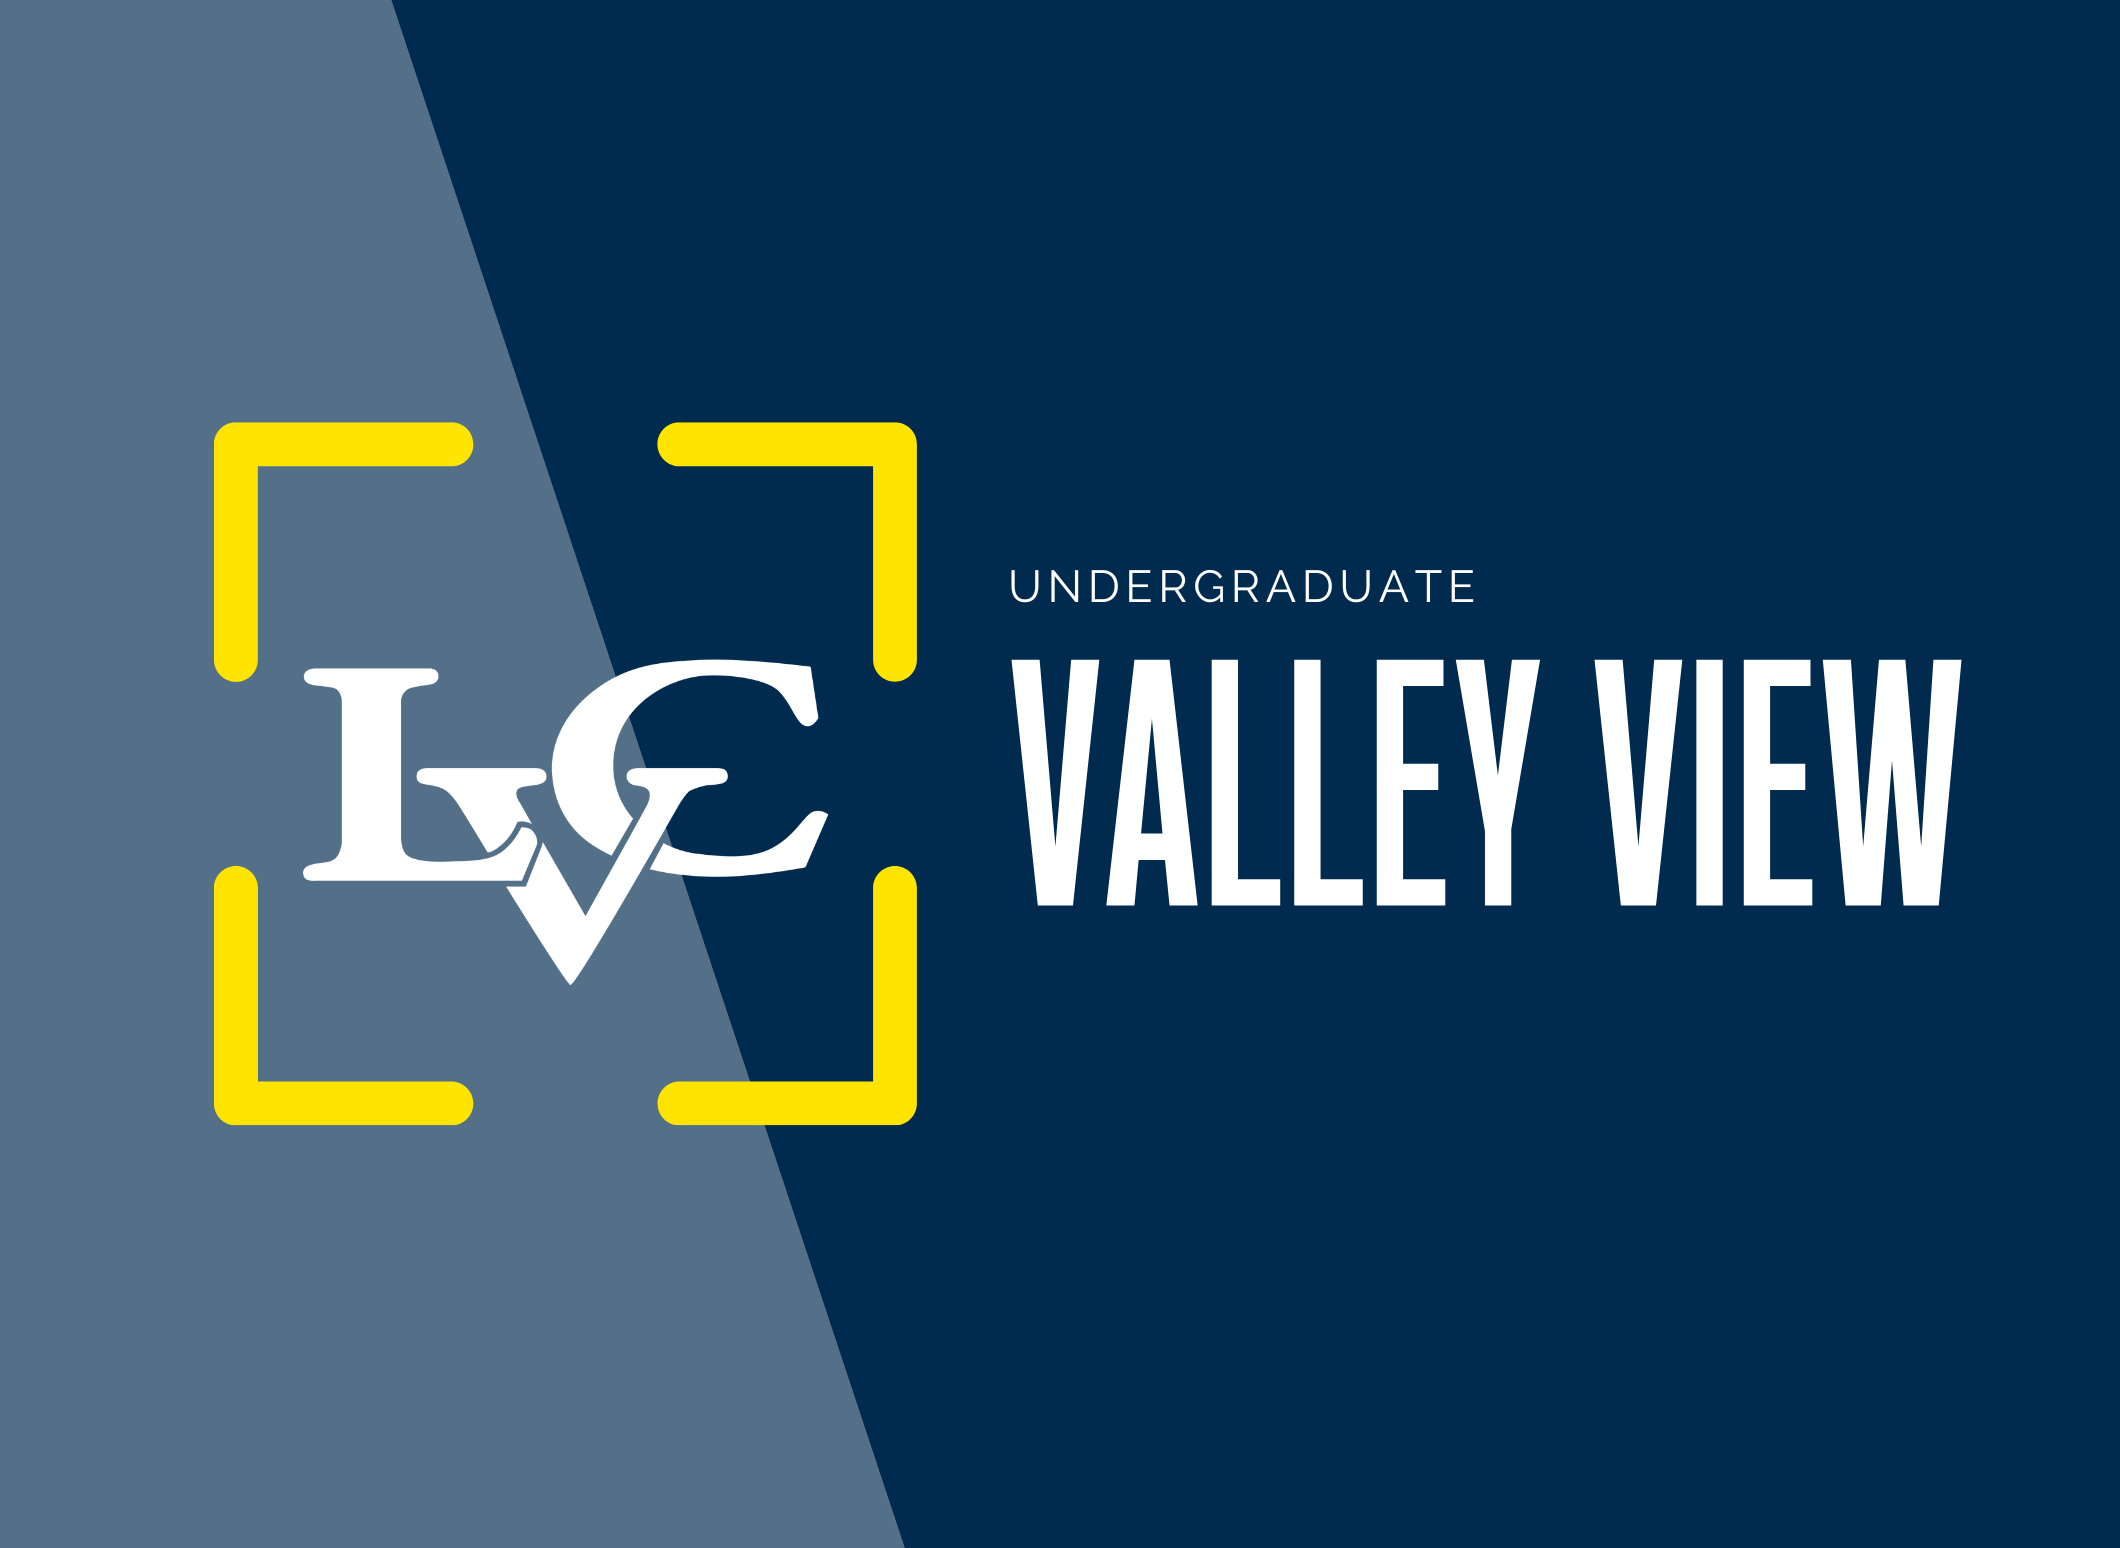 LVC Undergraduate Valley View event graphic